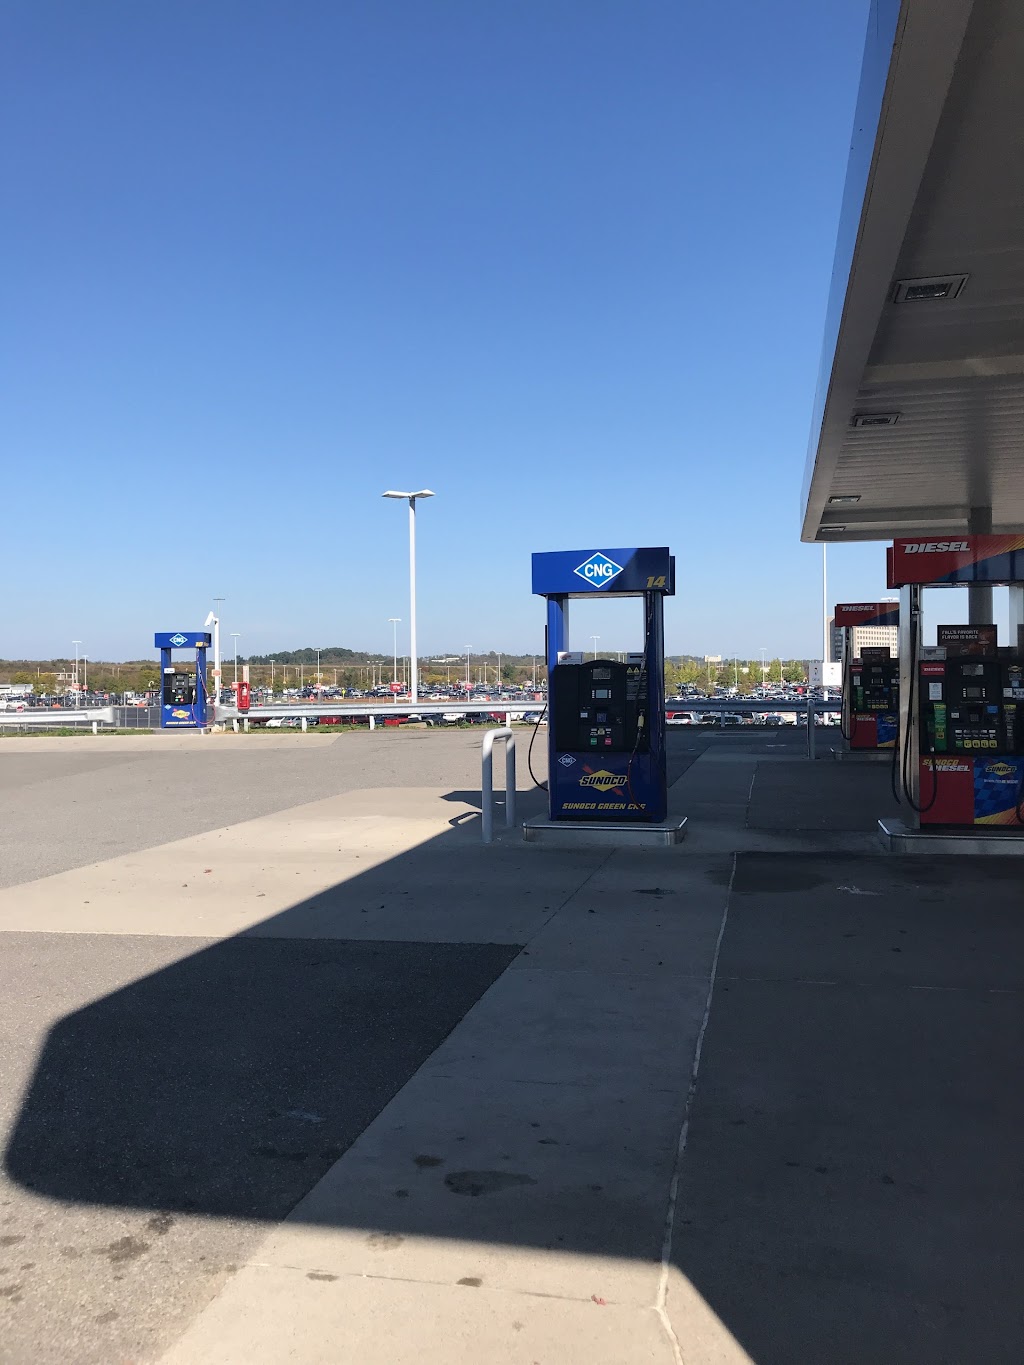 Sunoco Gas Station | Photo 5 of 9 | Address: 1201 Airport Blvd, Pittsburgh, PA 15231, USA | Phone: (724) 899-2321